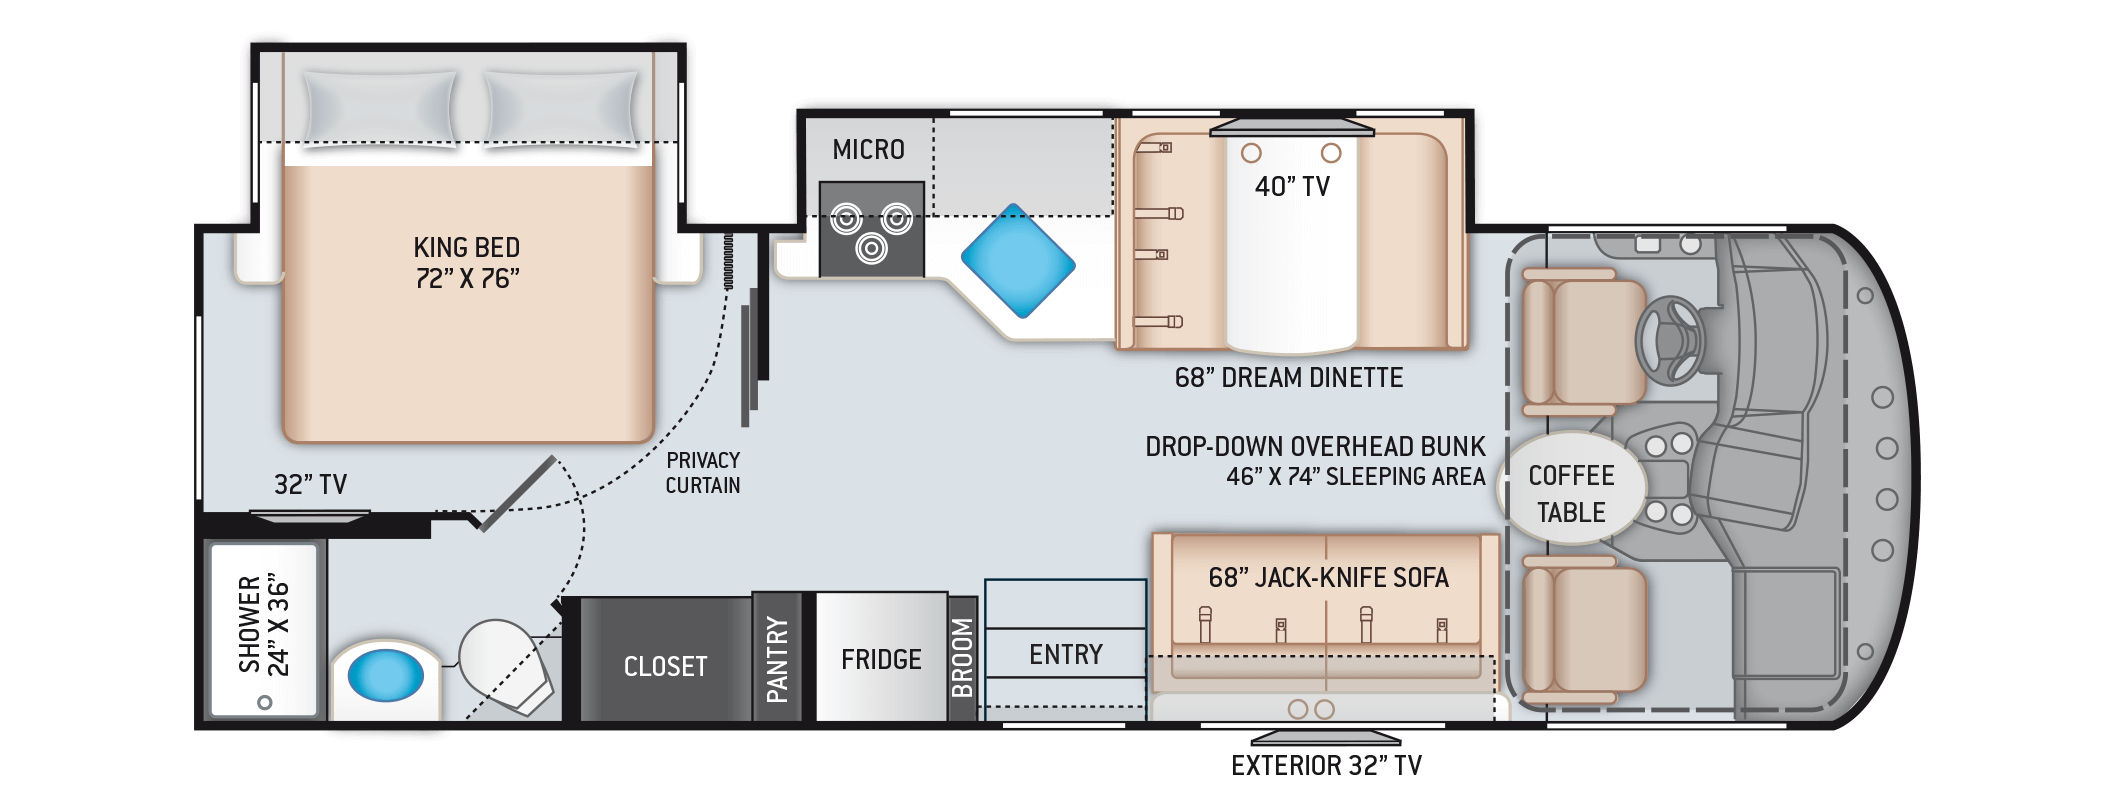 Home Interior: Thor Ace 30.1 Floor Plan : 2020 Thor Ace 32.3 ...